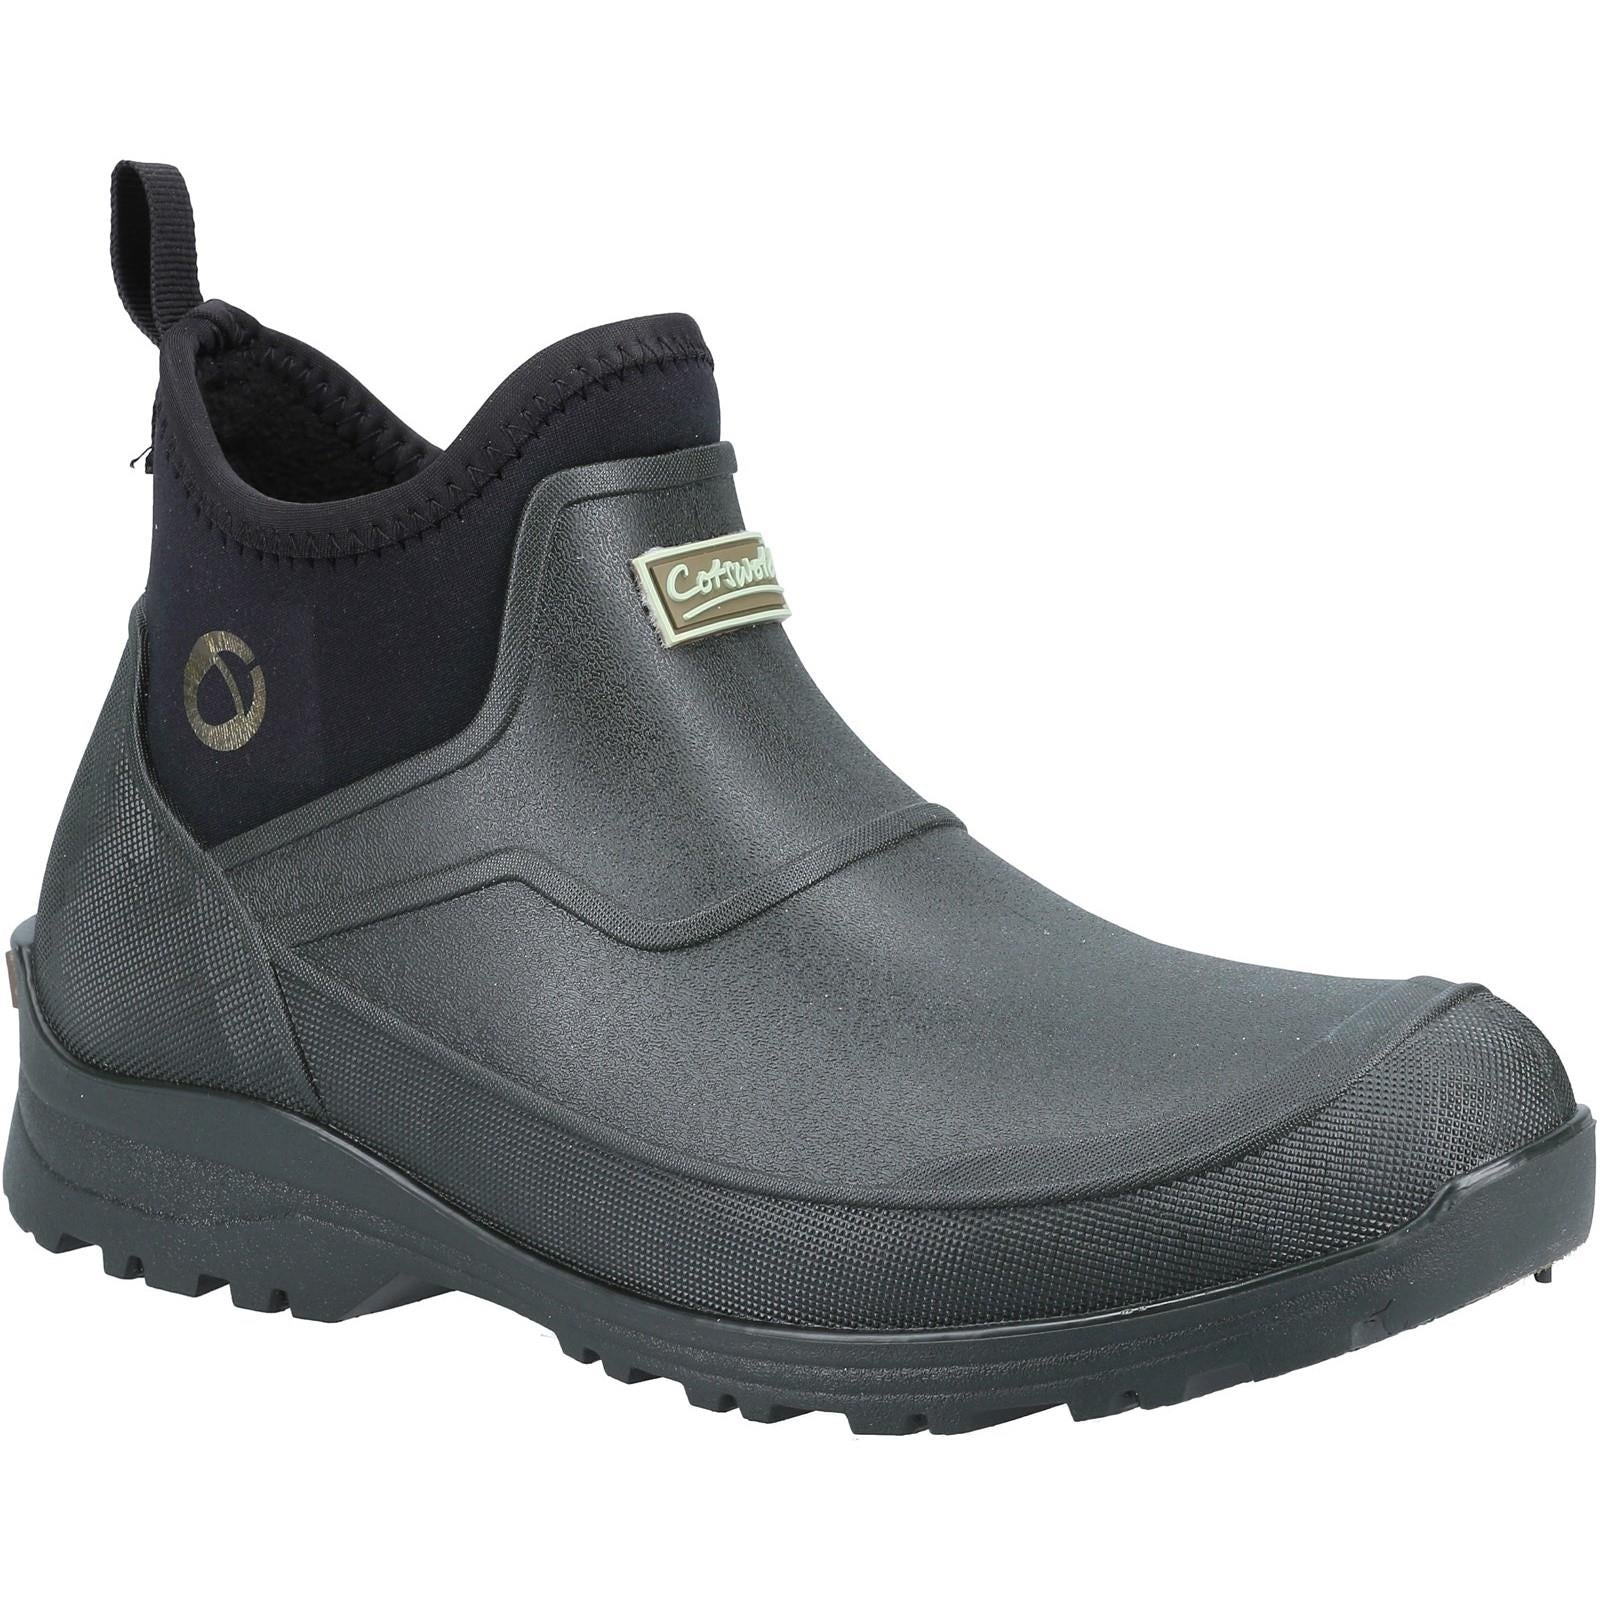 Cotswold Coleford waterproof neoprene ankle wellington boots